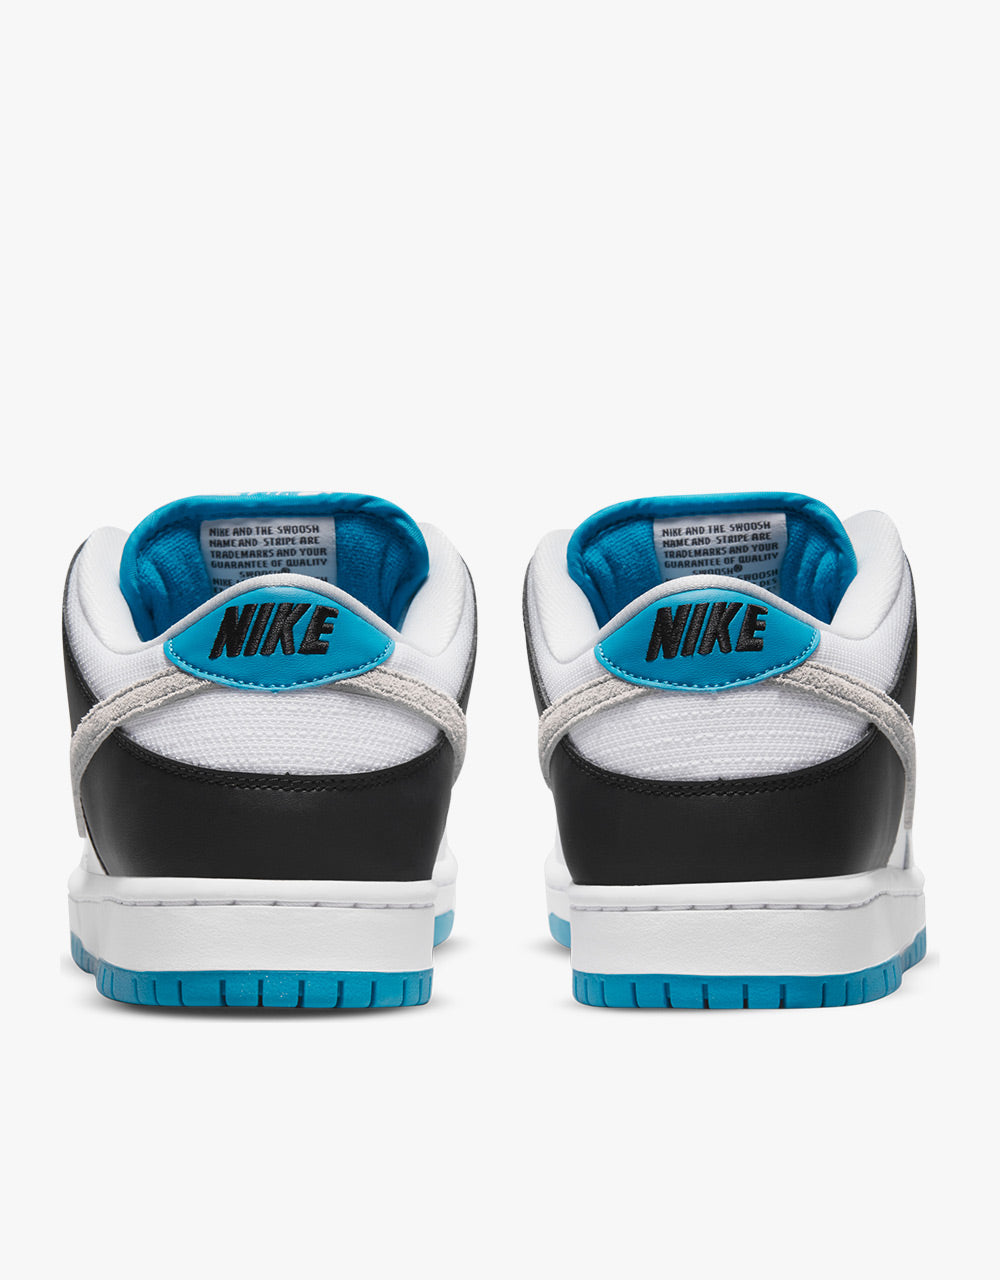 Nike SB 'Laser Blue' Dunk Low Pro - White/neutral grey-black-laser blue